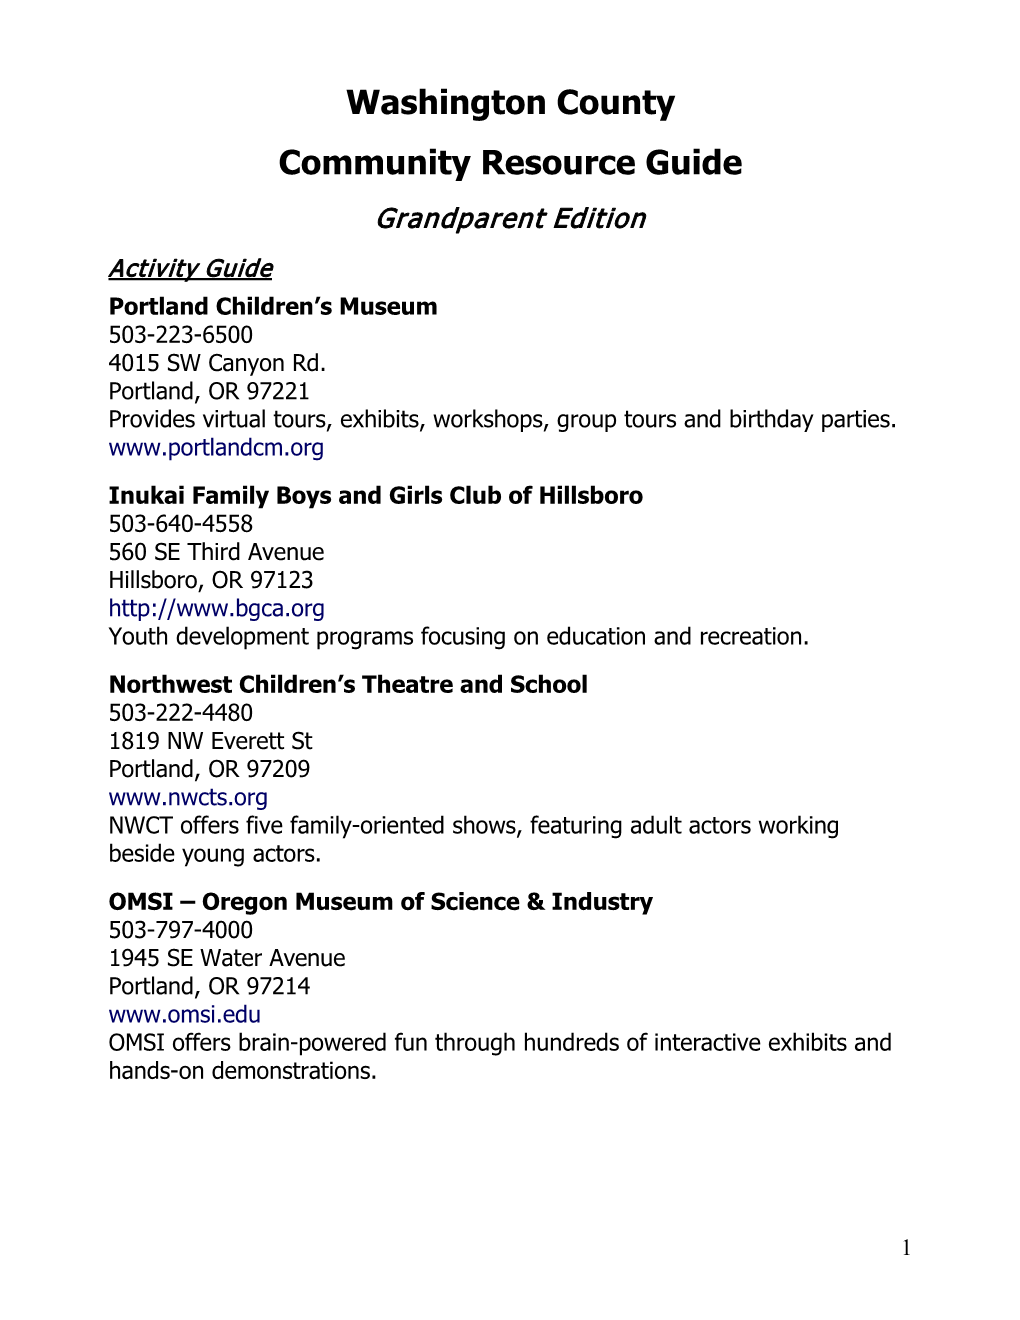 Washington County Community Resource Guide Grandparent Edition